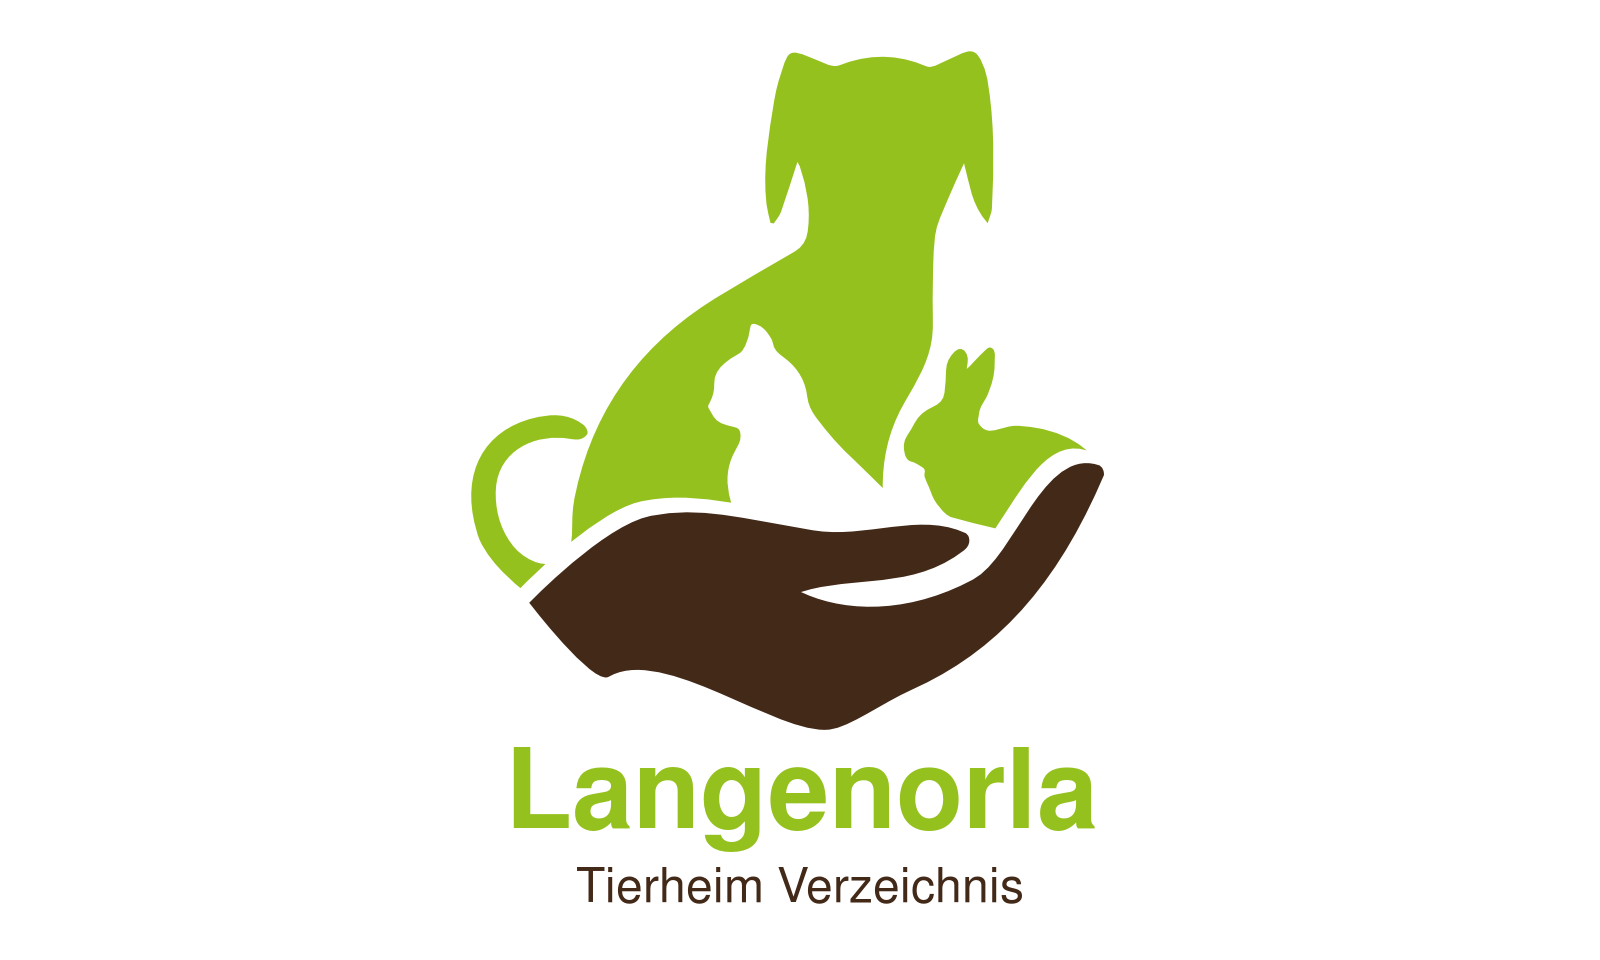 Tierheim Langenorla